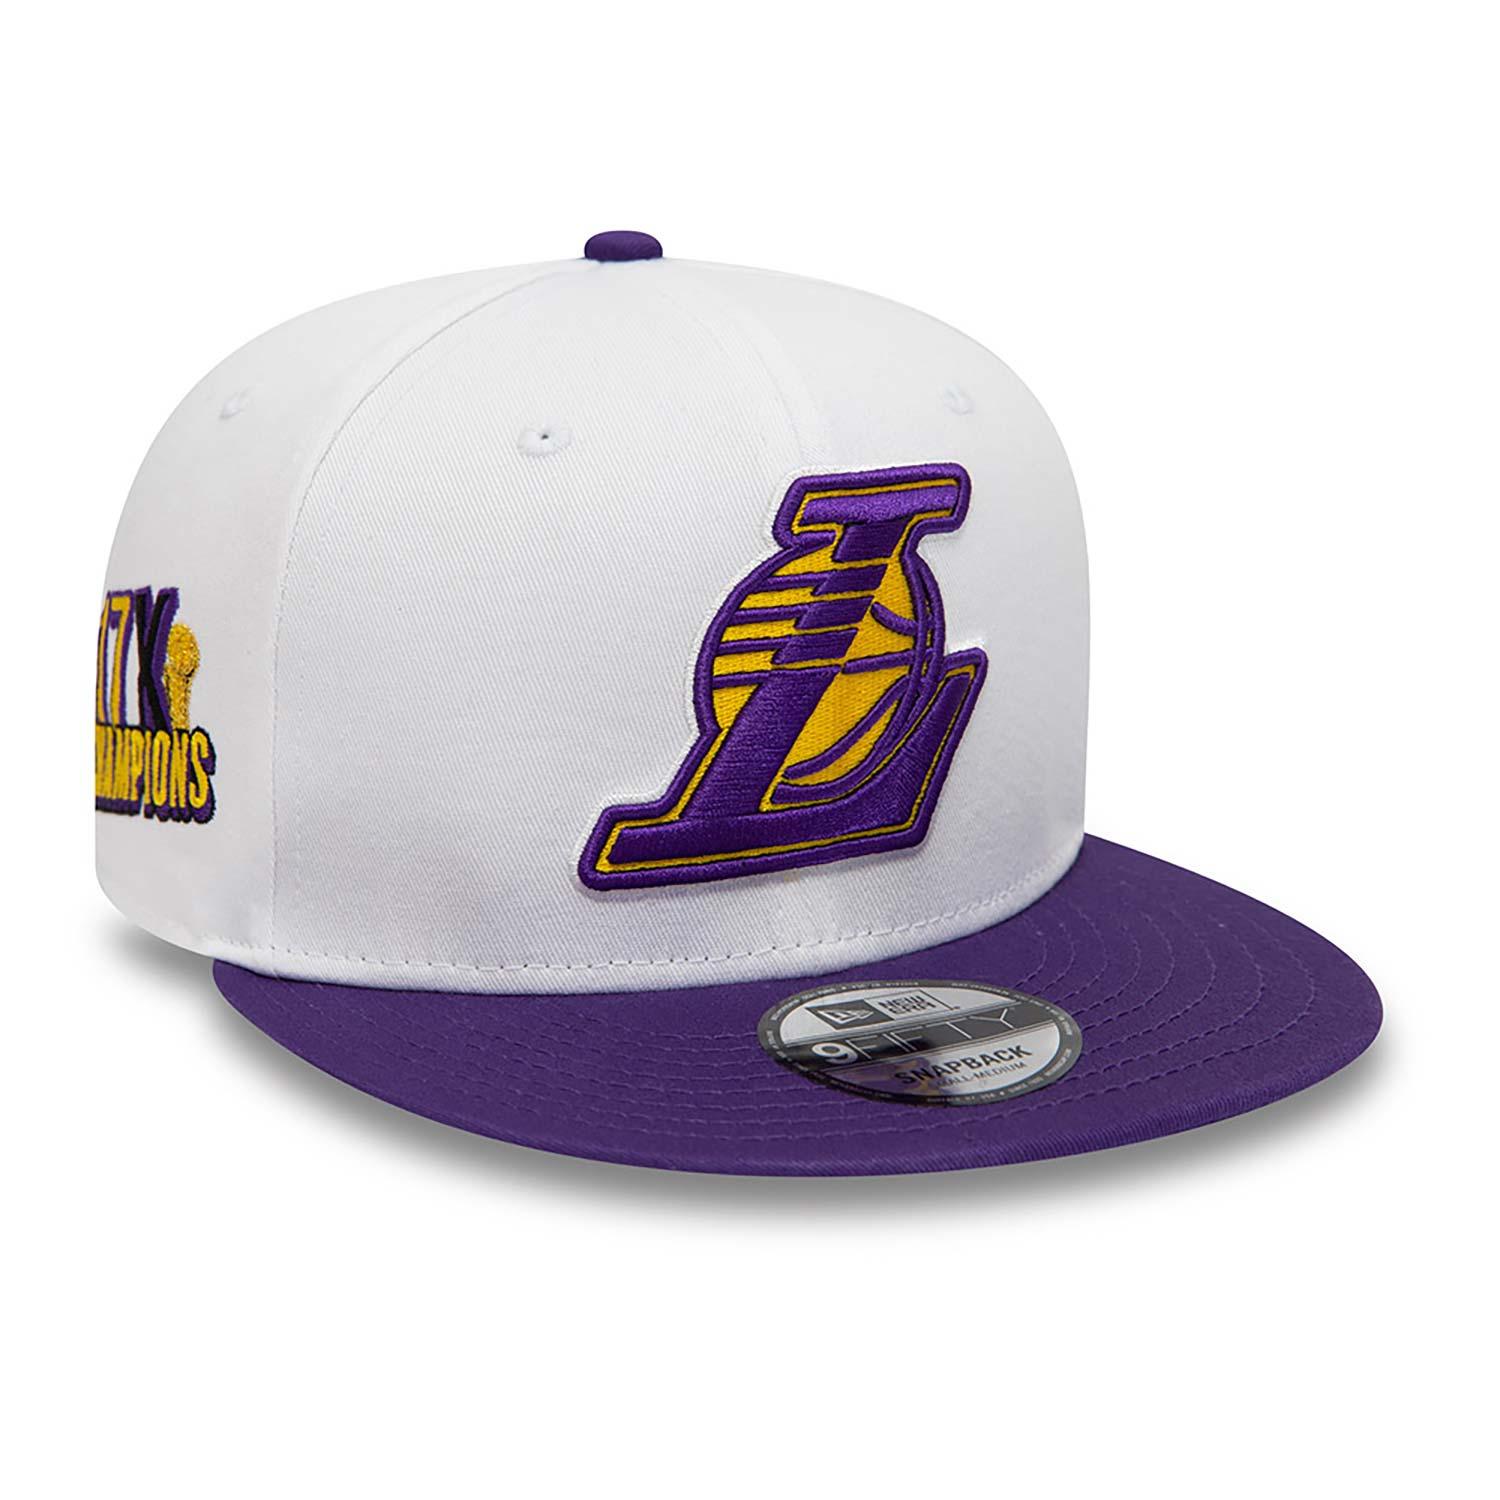 Los Angeles Lakers Hats, Lakers Caps, Beanie, Snapbacks